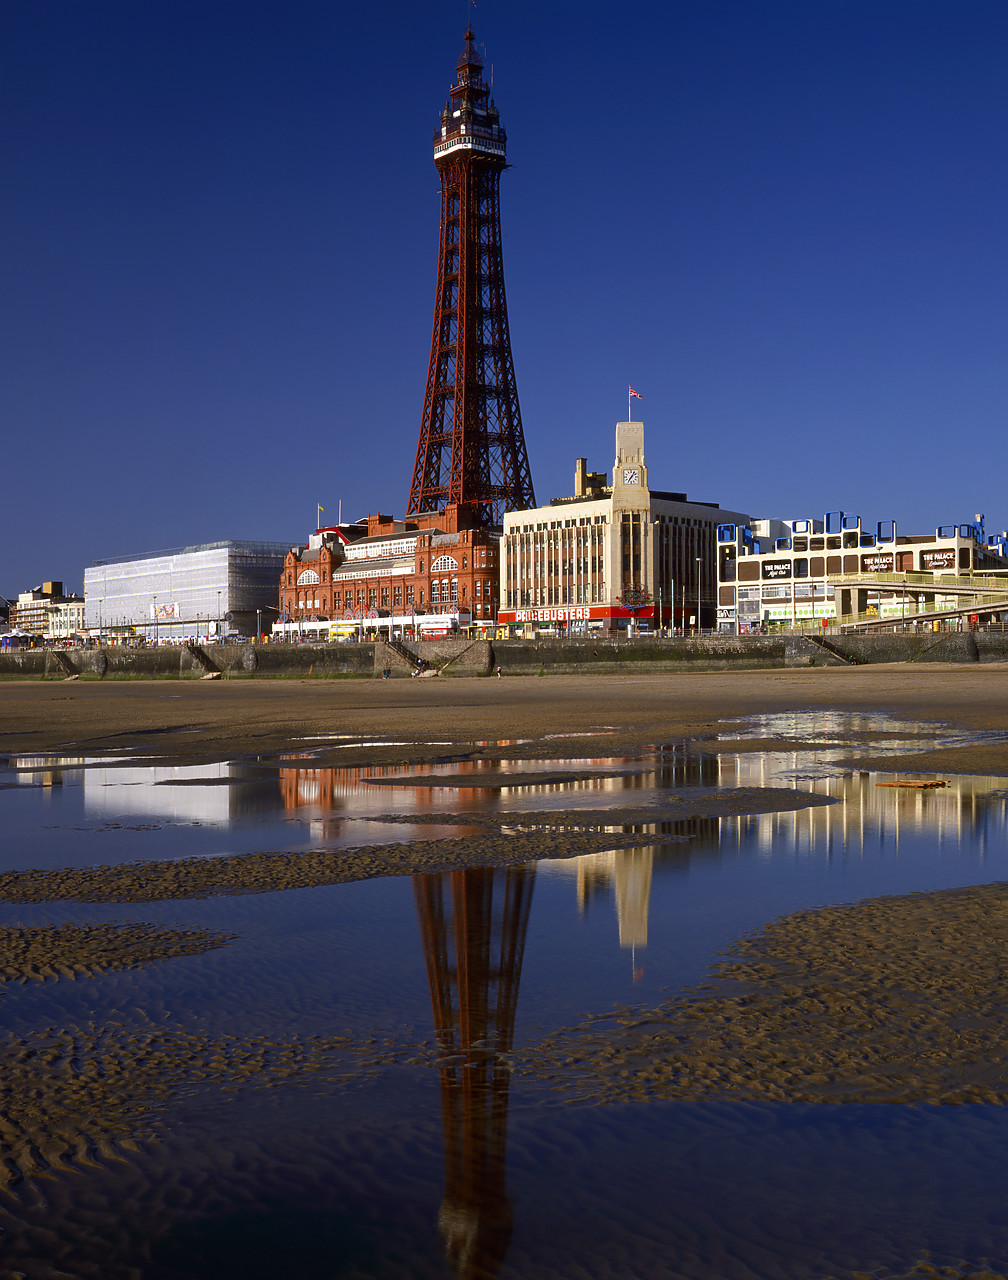 #934330-1 - Blackpool Tower Reflecting in Tidepools, Blackpool, Lancashire, England